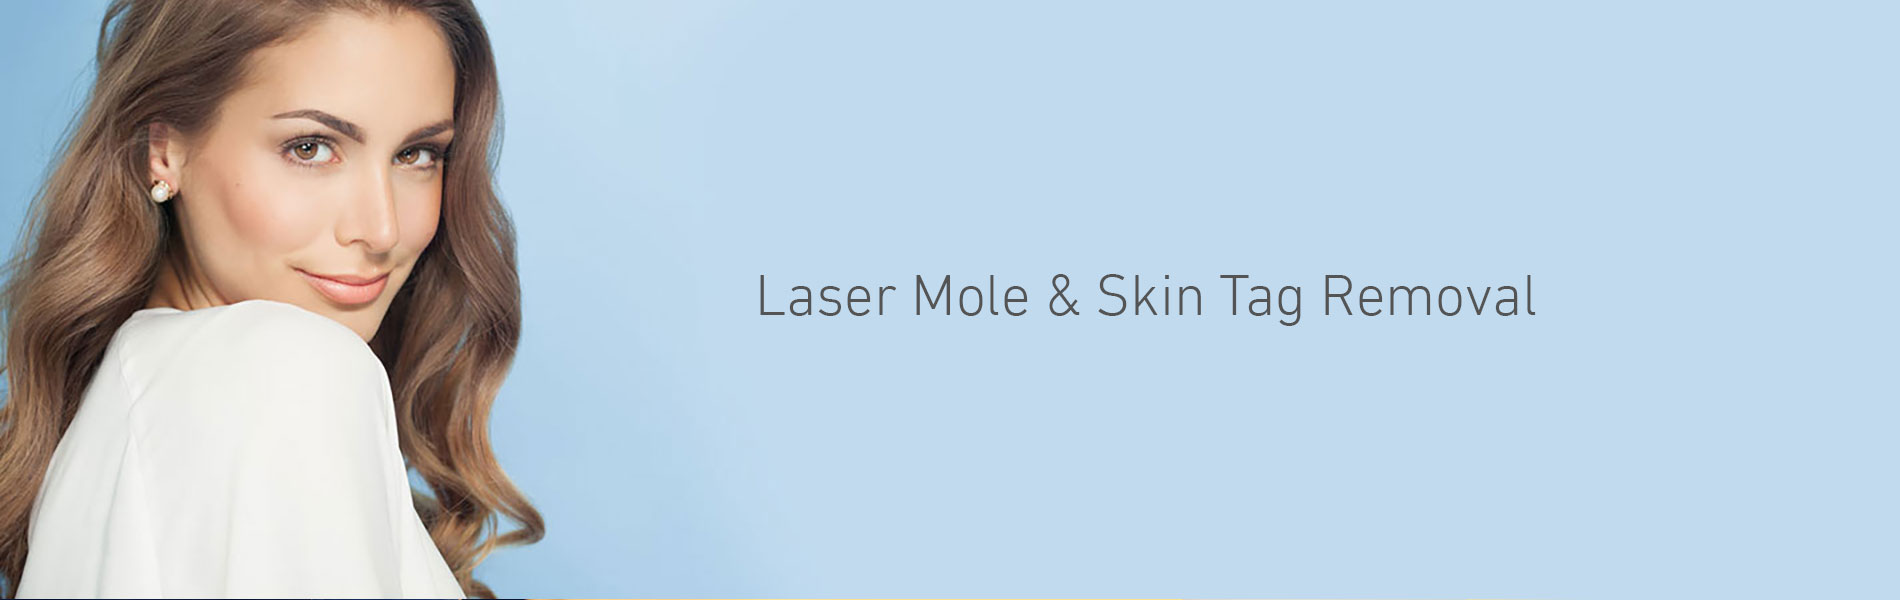 Laser Mole Skin Tag Removal Southampton Hampshire Aesthetics Clinics